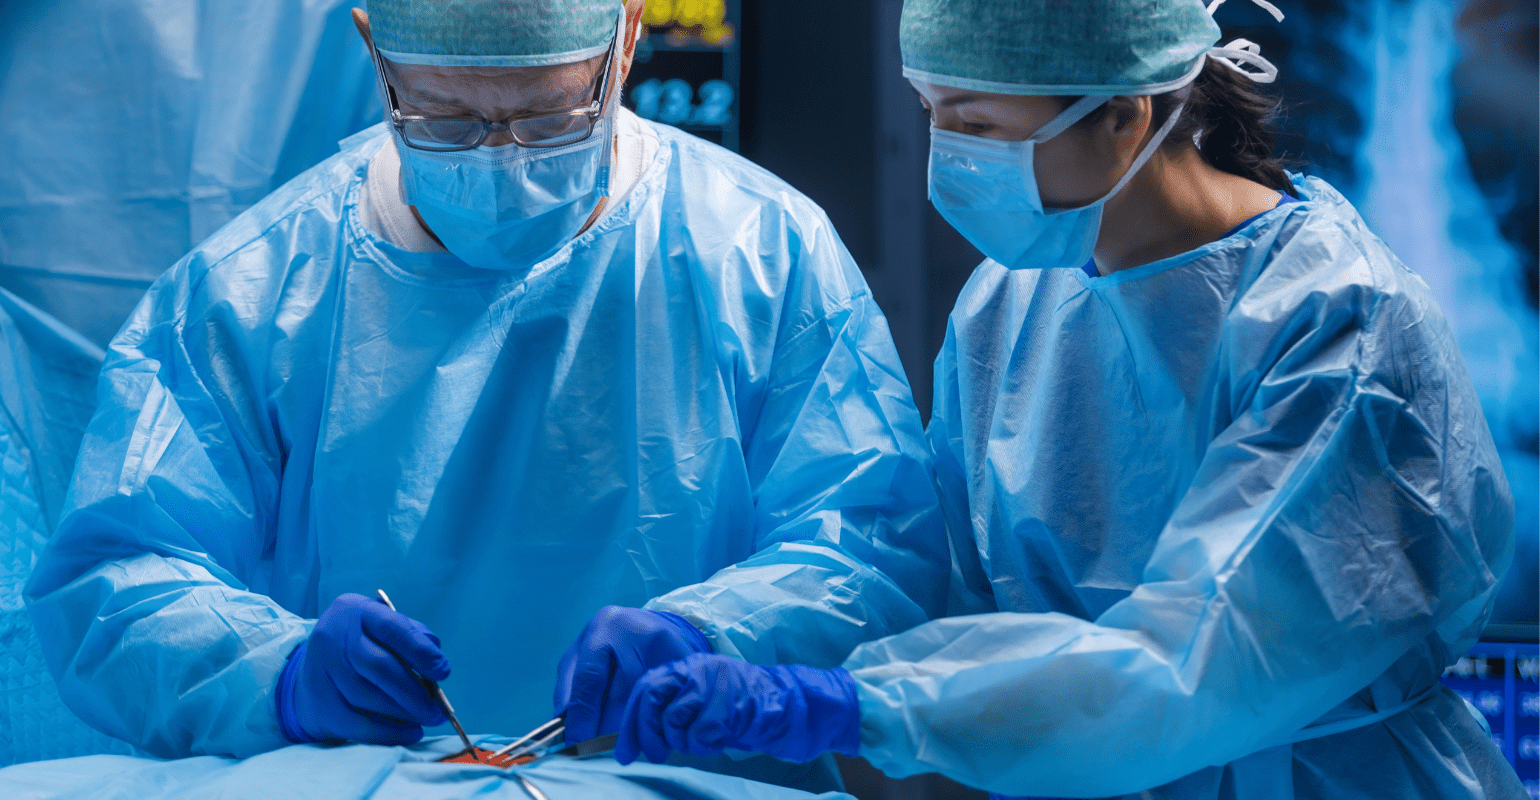 Pioneering AI technology set to transform organ transplantation